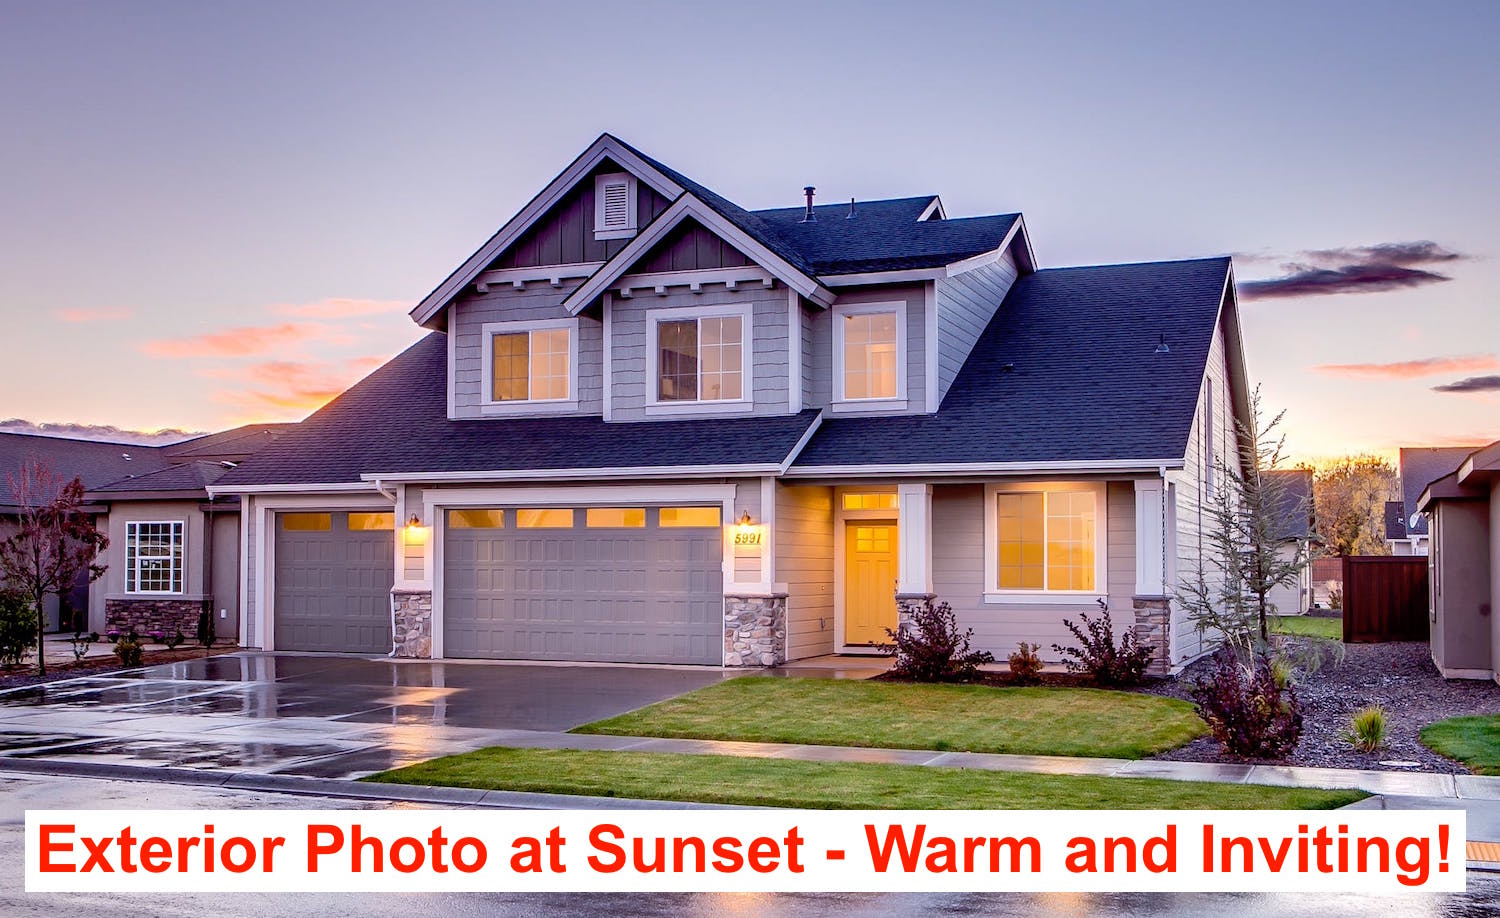 Example of Exterior Rental Property Photo Taken at Sunset